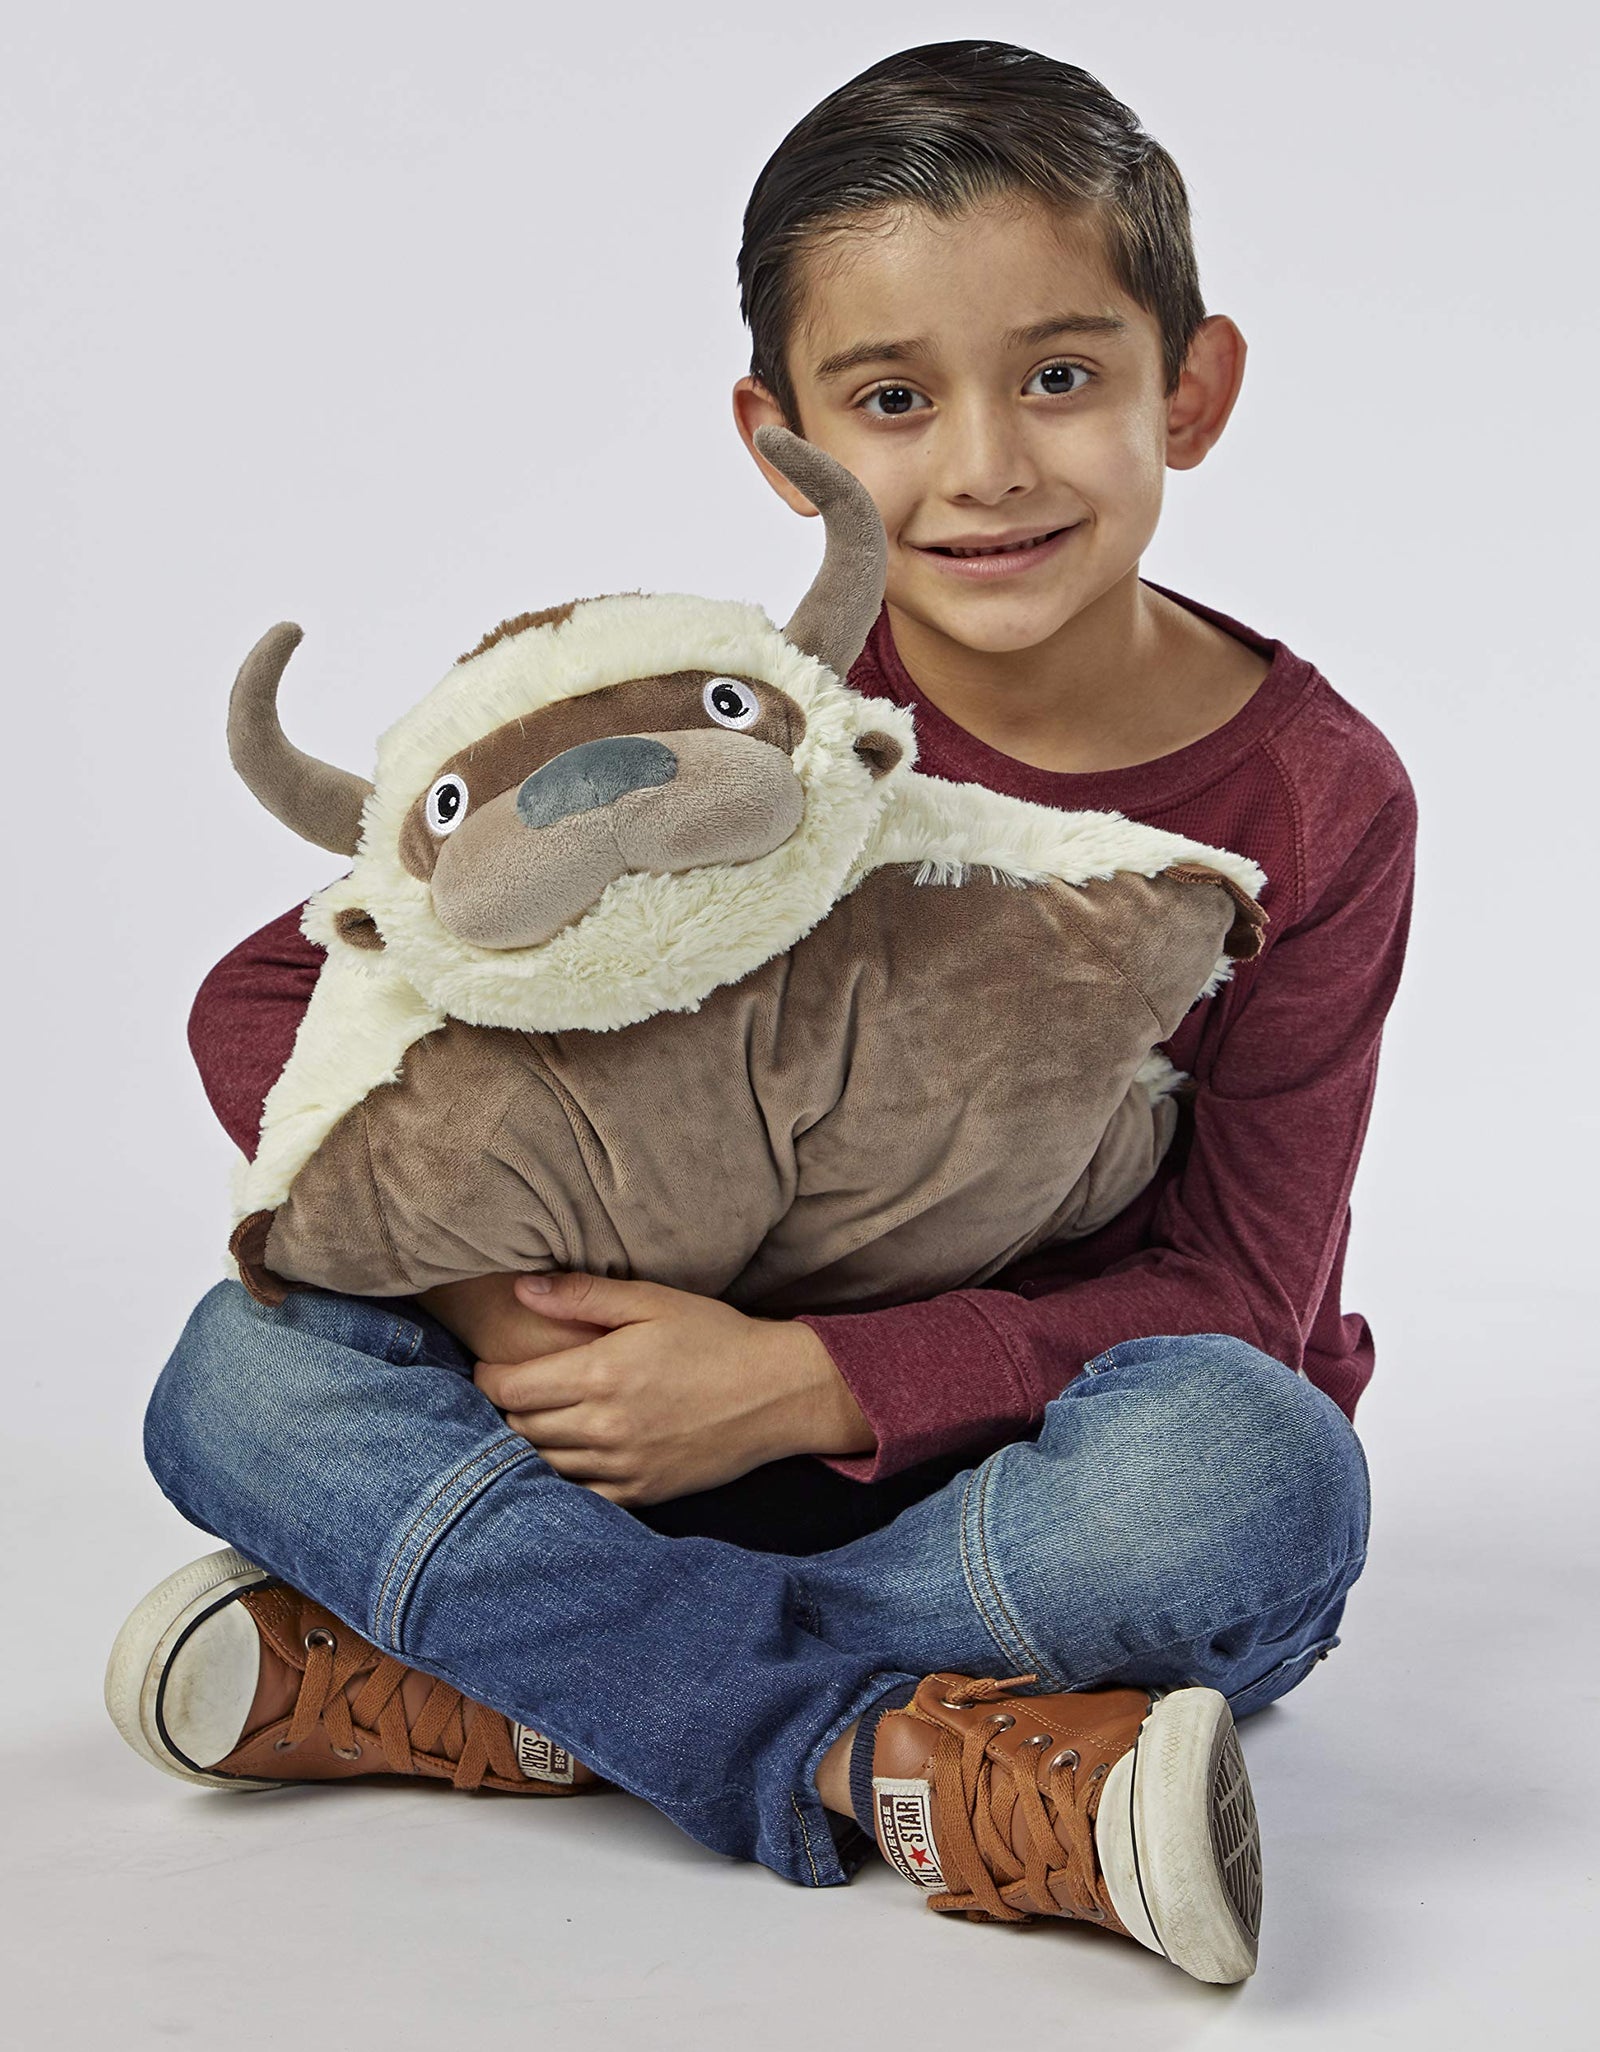 Pillow Pets 16” Appa Stuffed Animal, Nickelodeon Avatar The Last Airbender Plush Toy, White